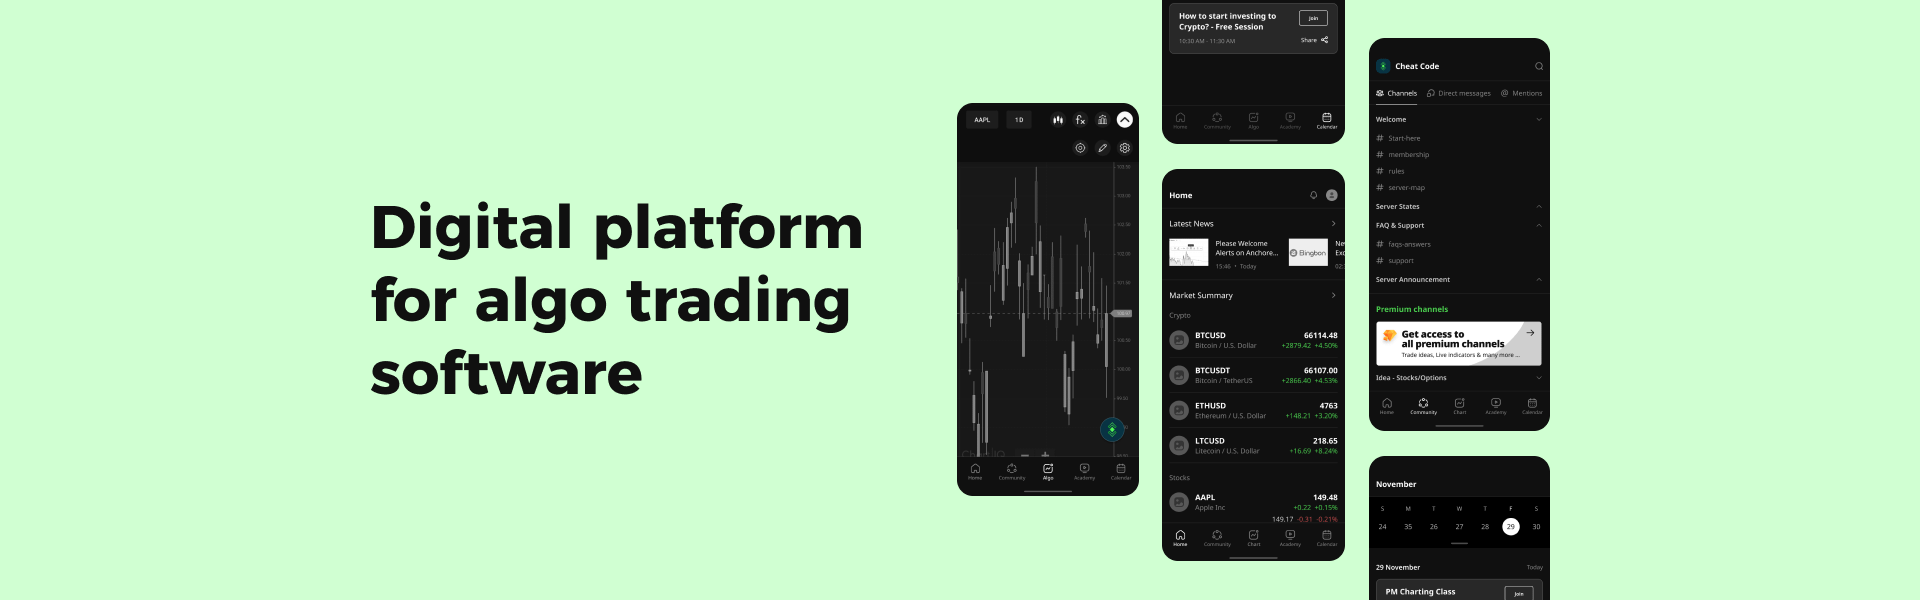 digital platform for algo trading software